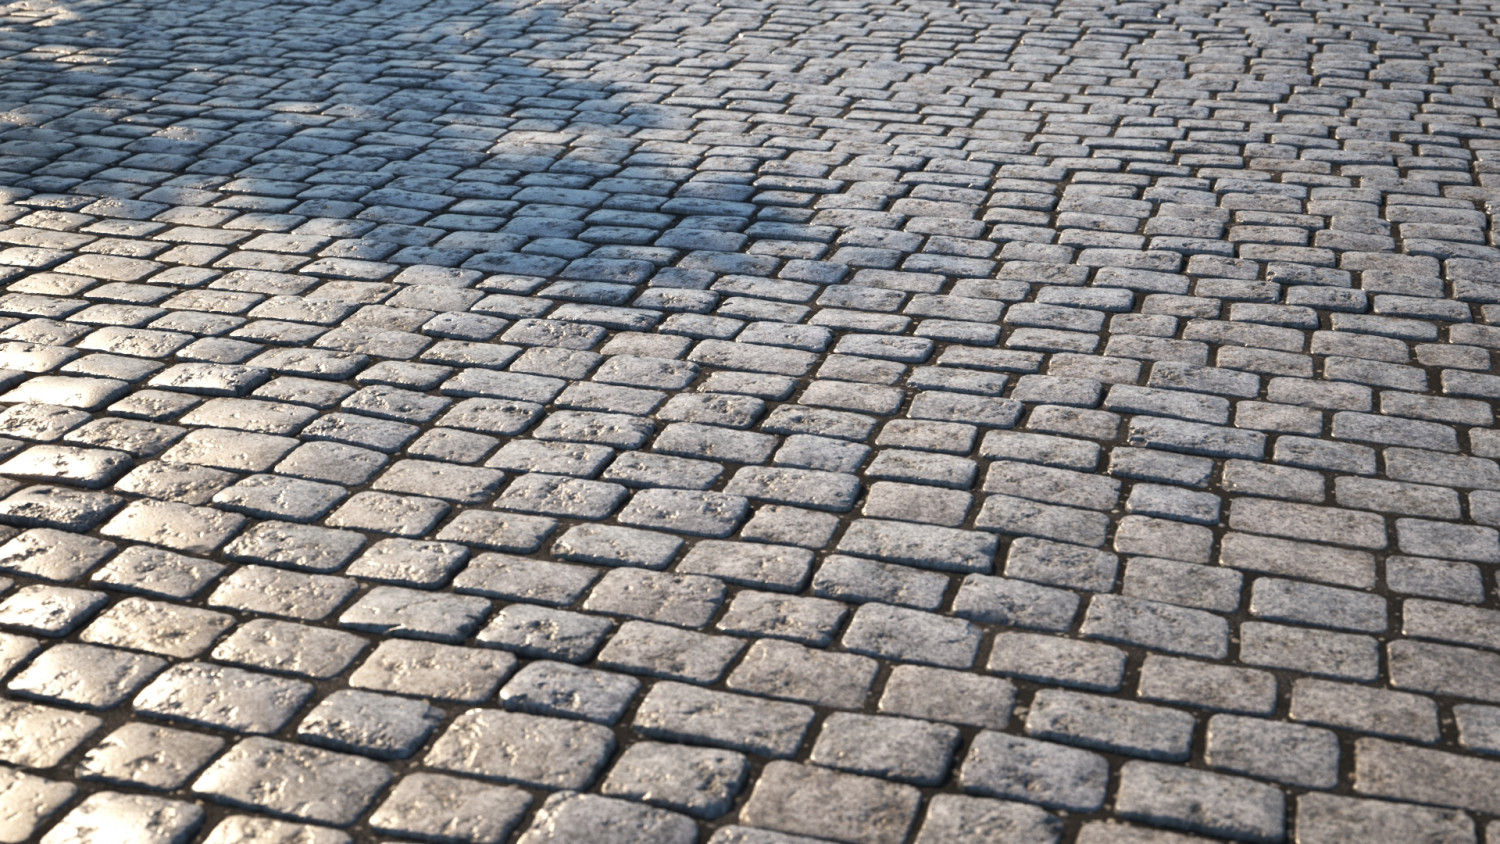 Stone brick pavement texture